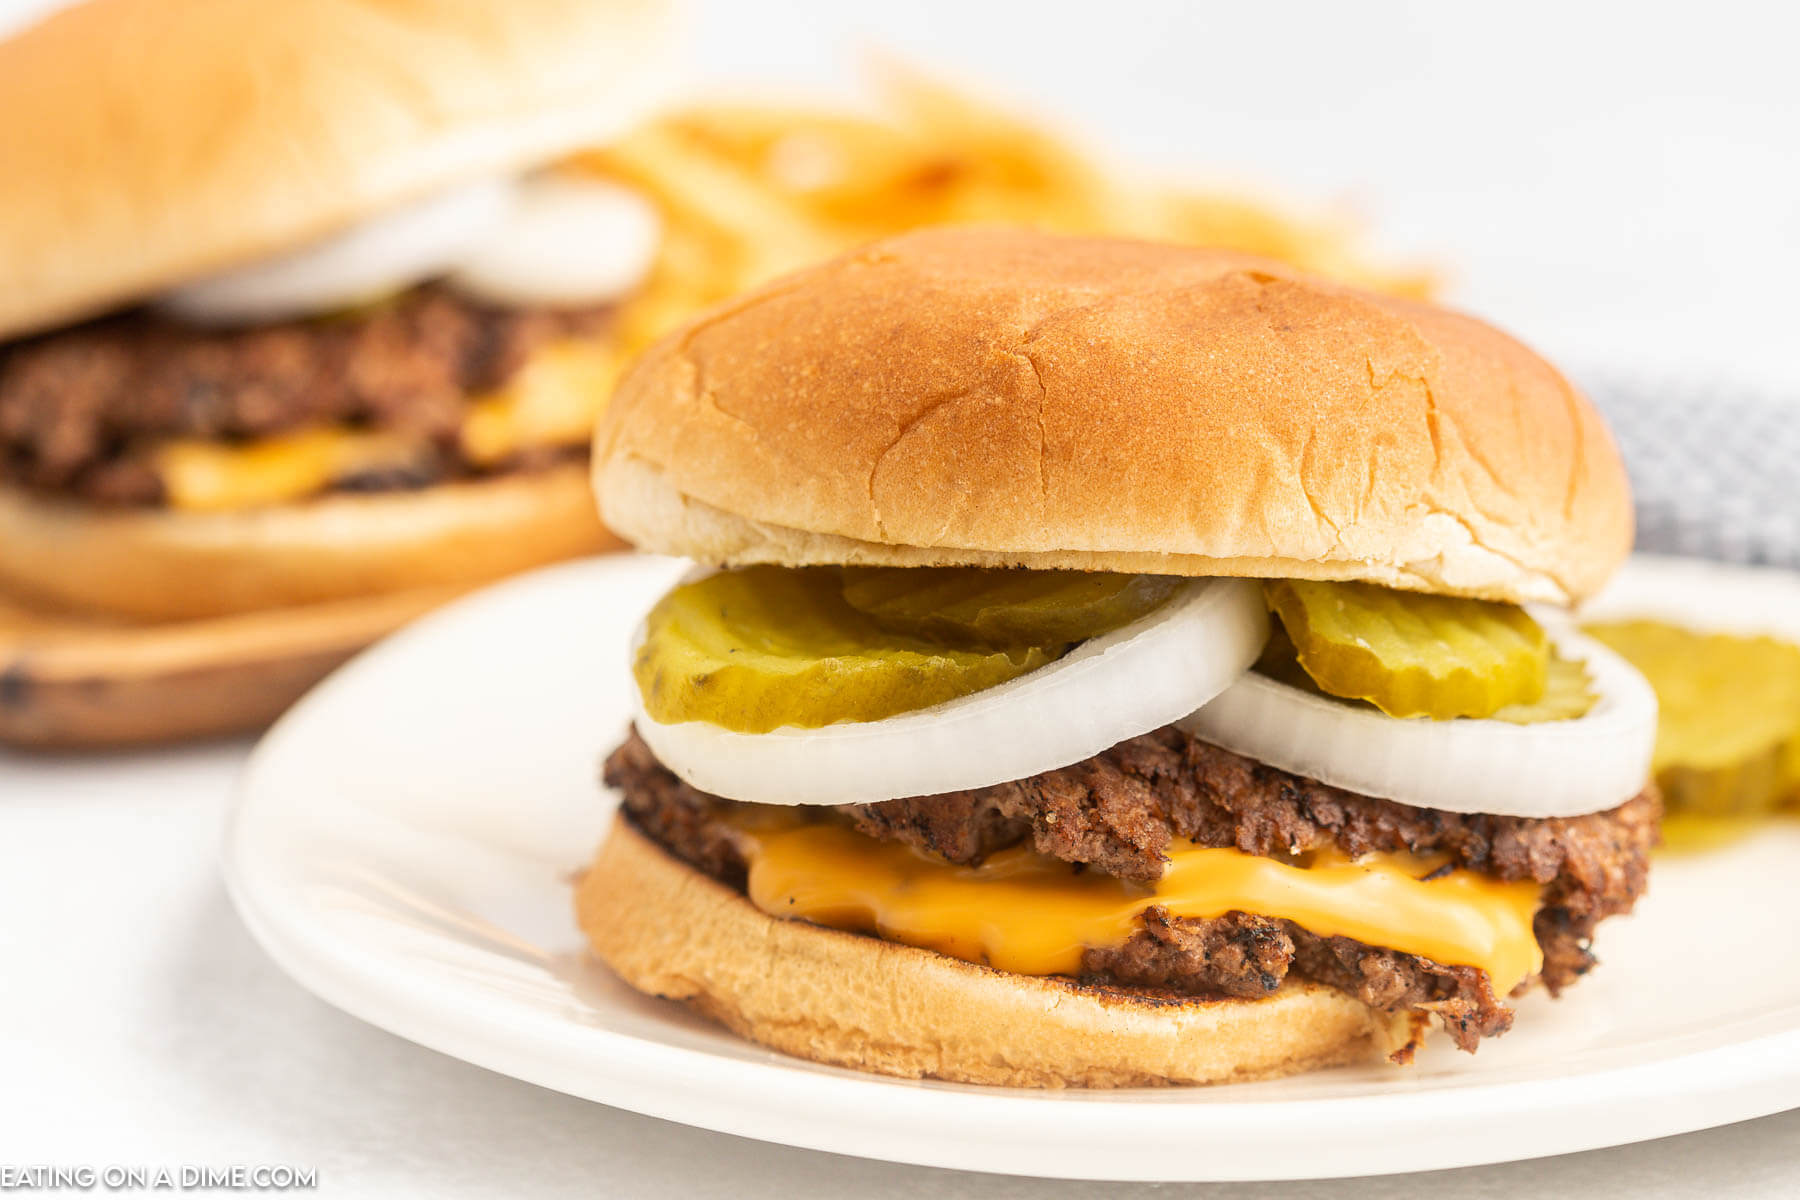 Copycat freddy's steakburger recipe ready to enjoy. 